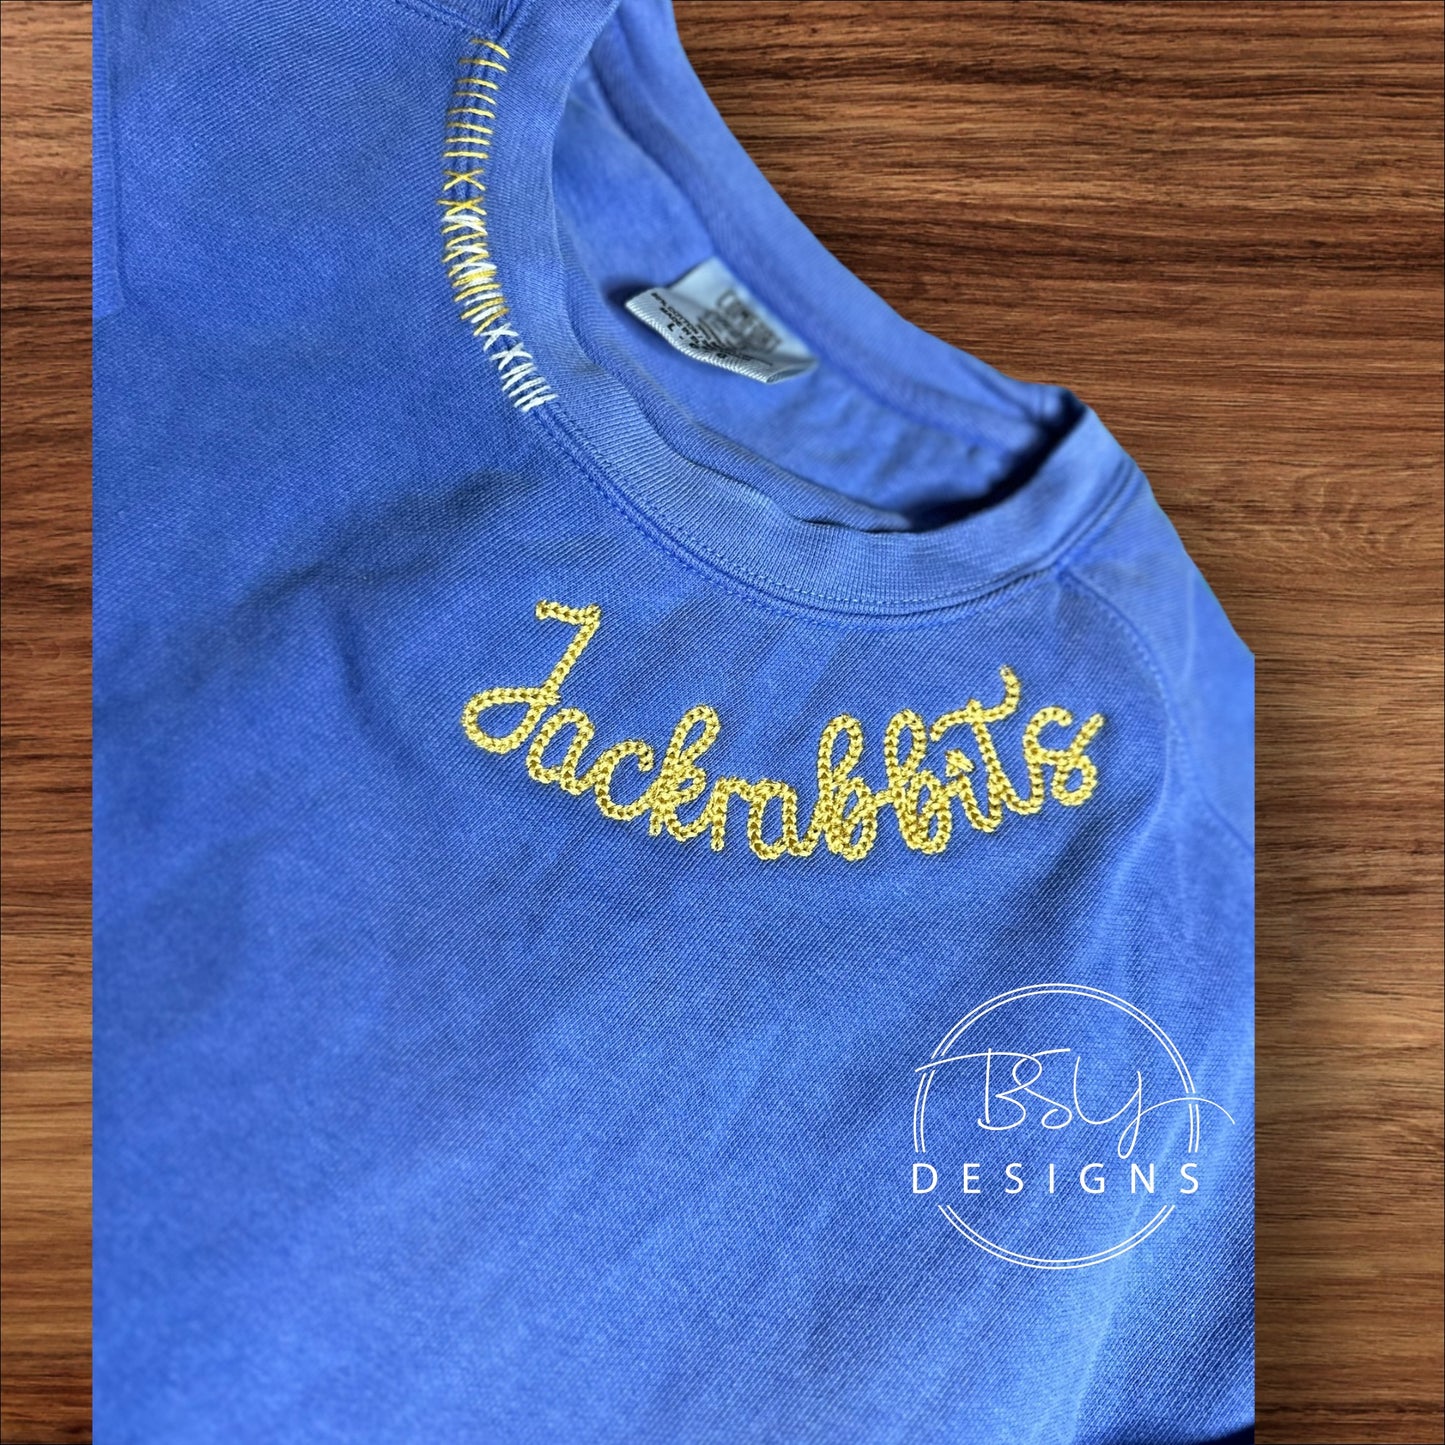 Jacks embroidered crewneck sweatshirt